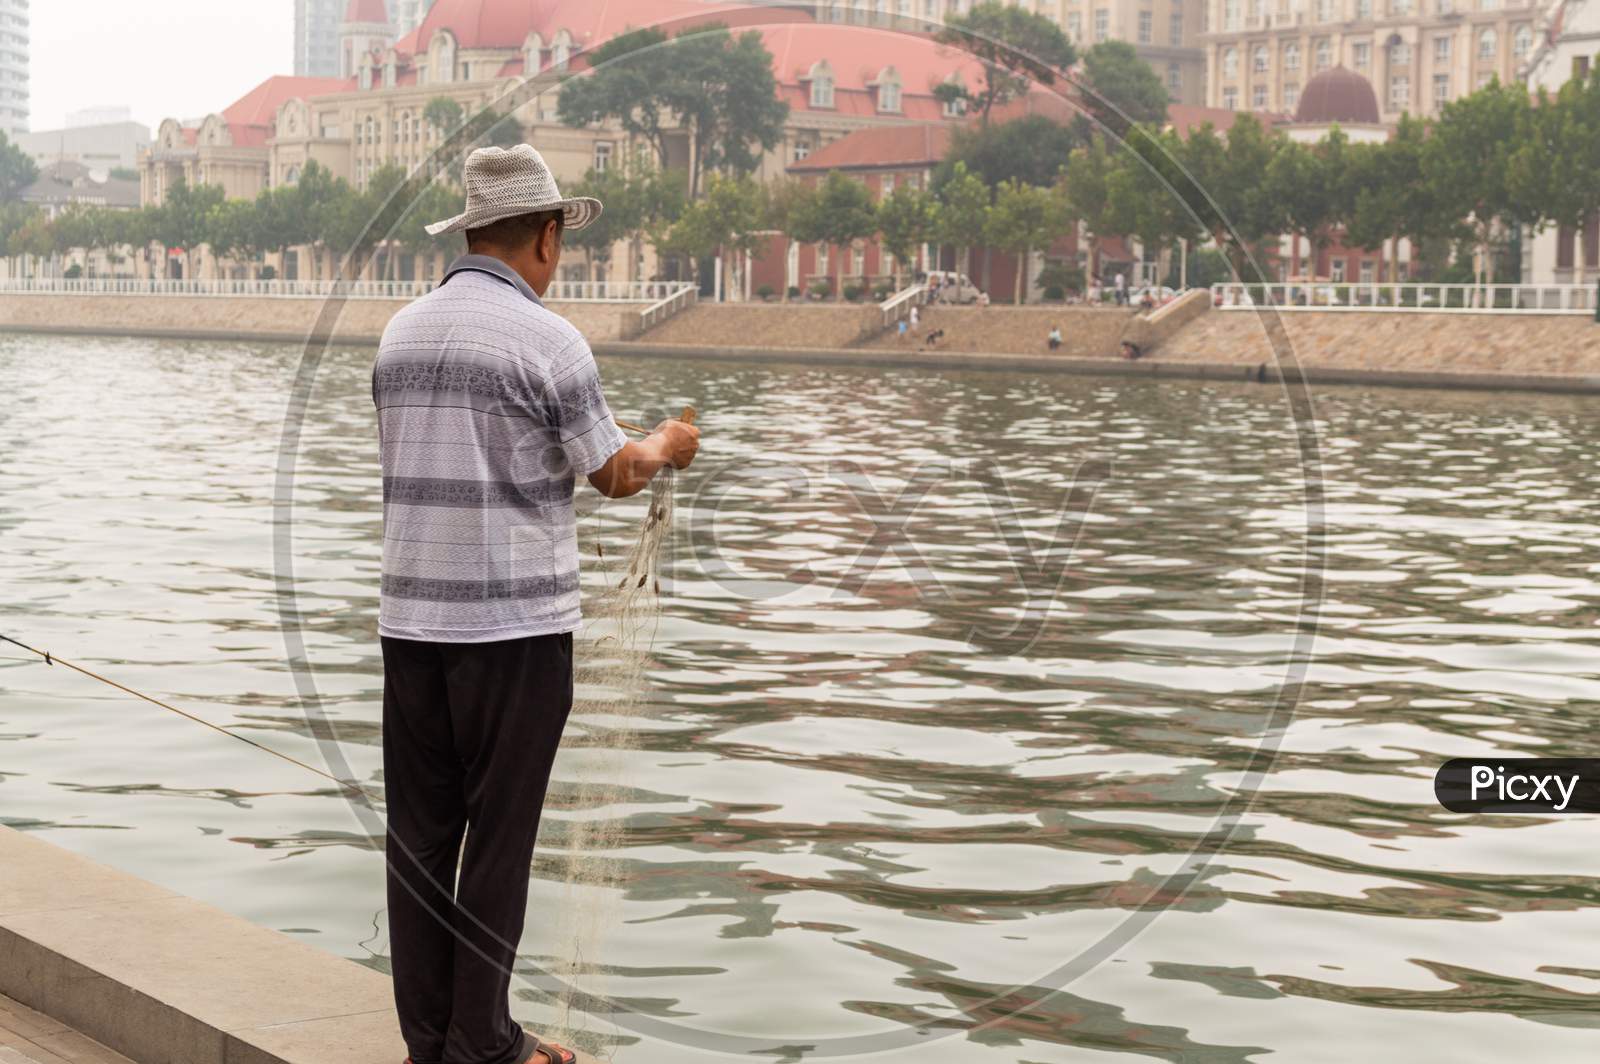 Fisherman Fishing On The Bank Of The Hai River In Tianjin, China